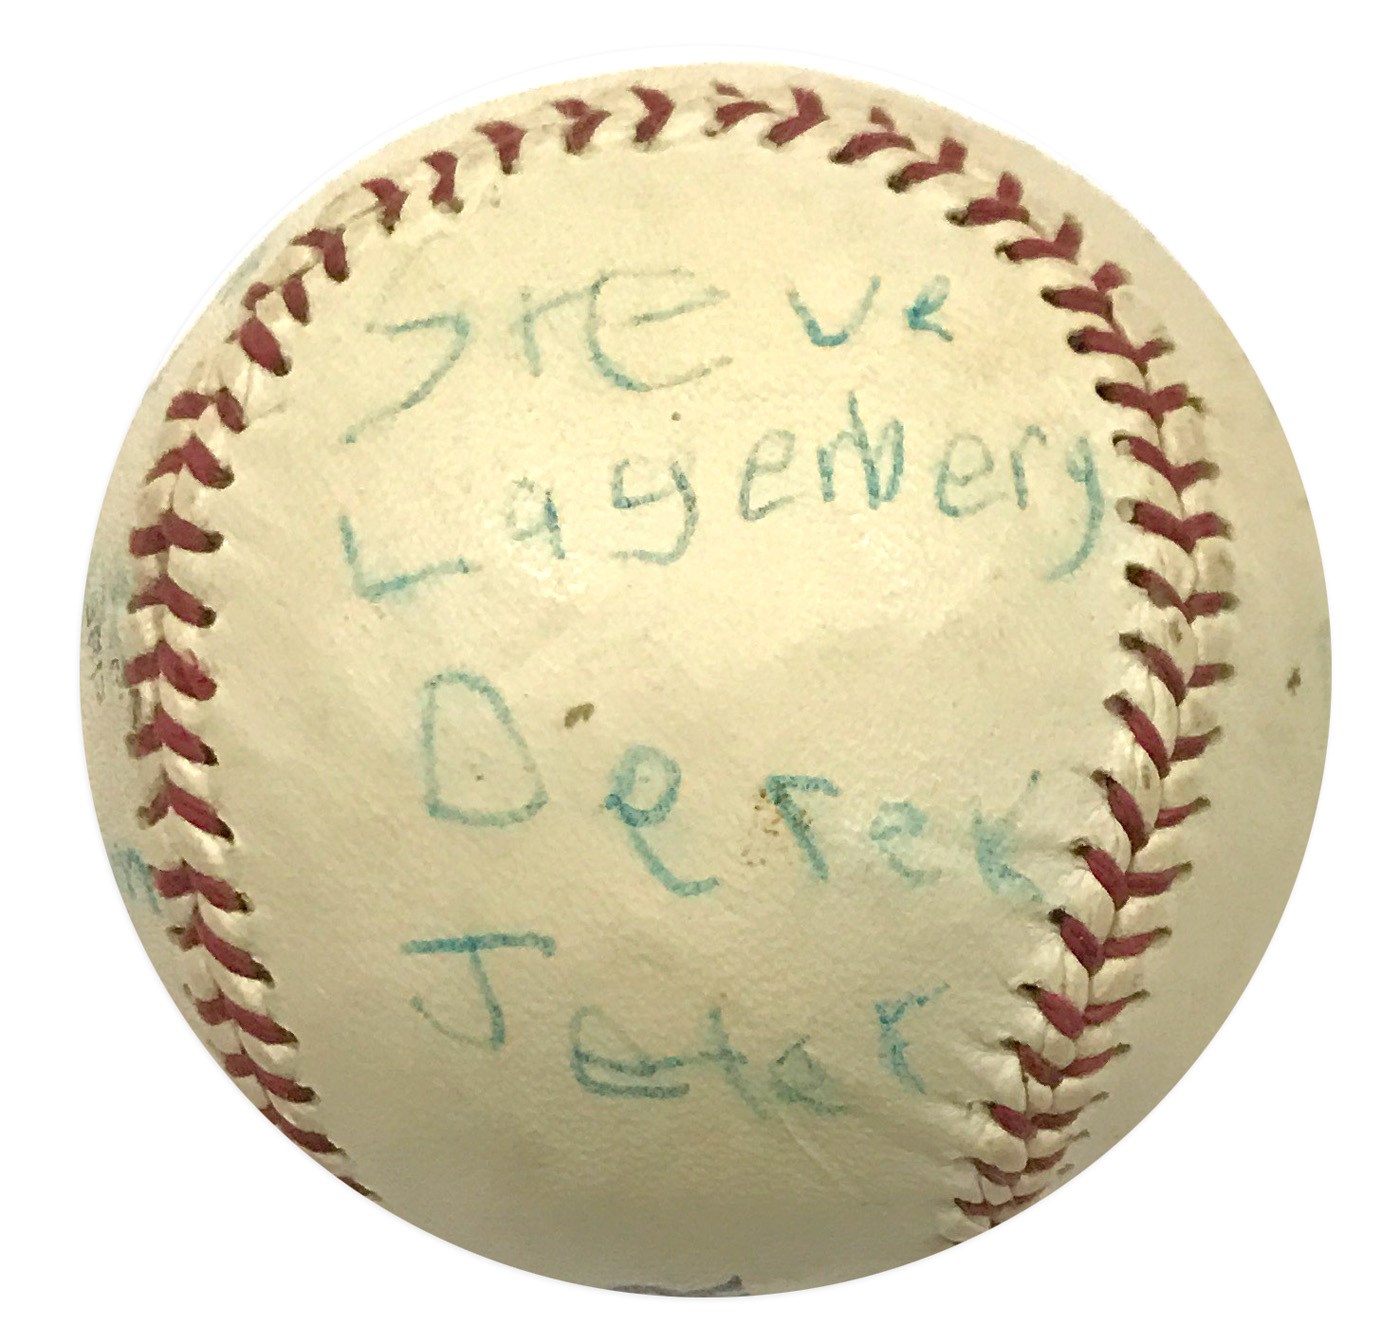 1982 Derek Jeter Signed Little League Baseball w/ Impeccable Provenance